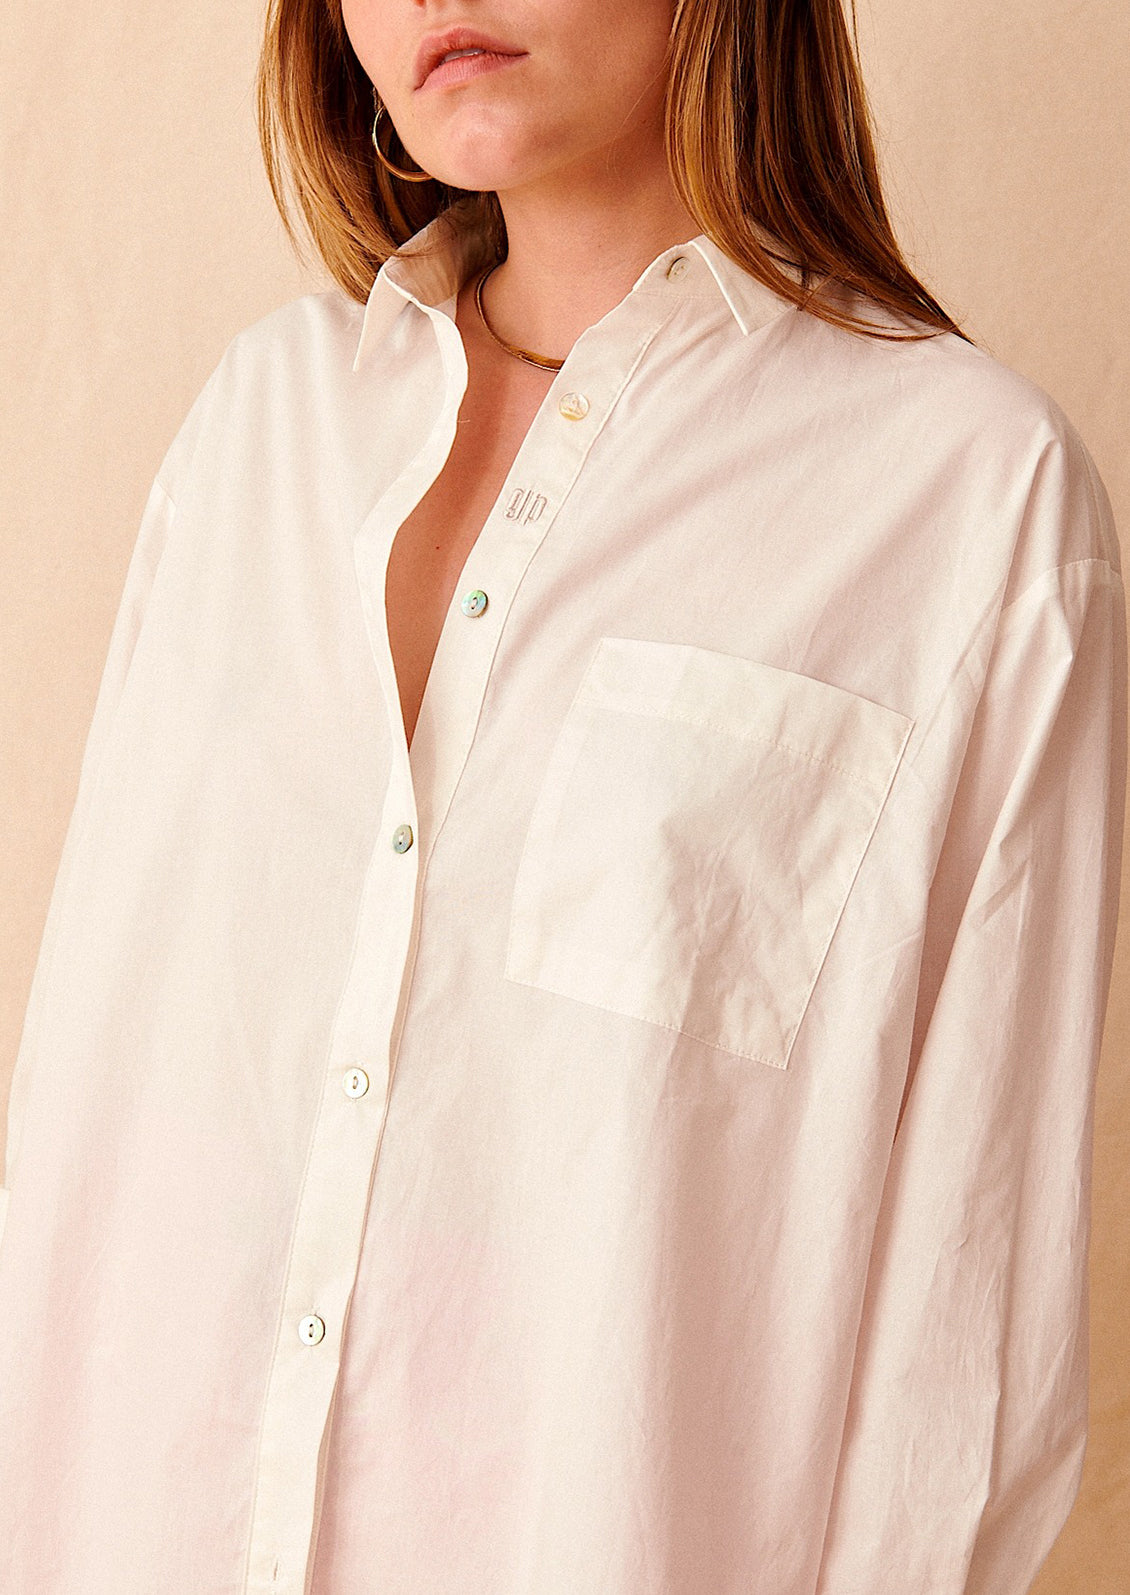 A woman wearing an oversized white cotton shirt.